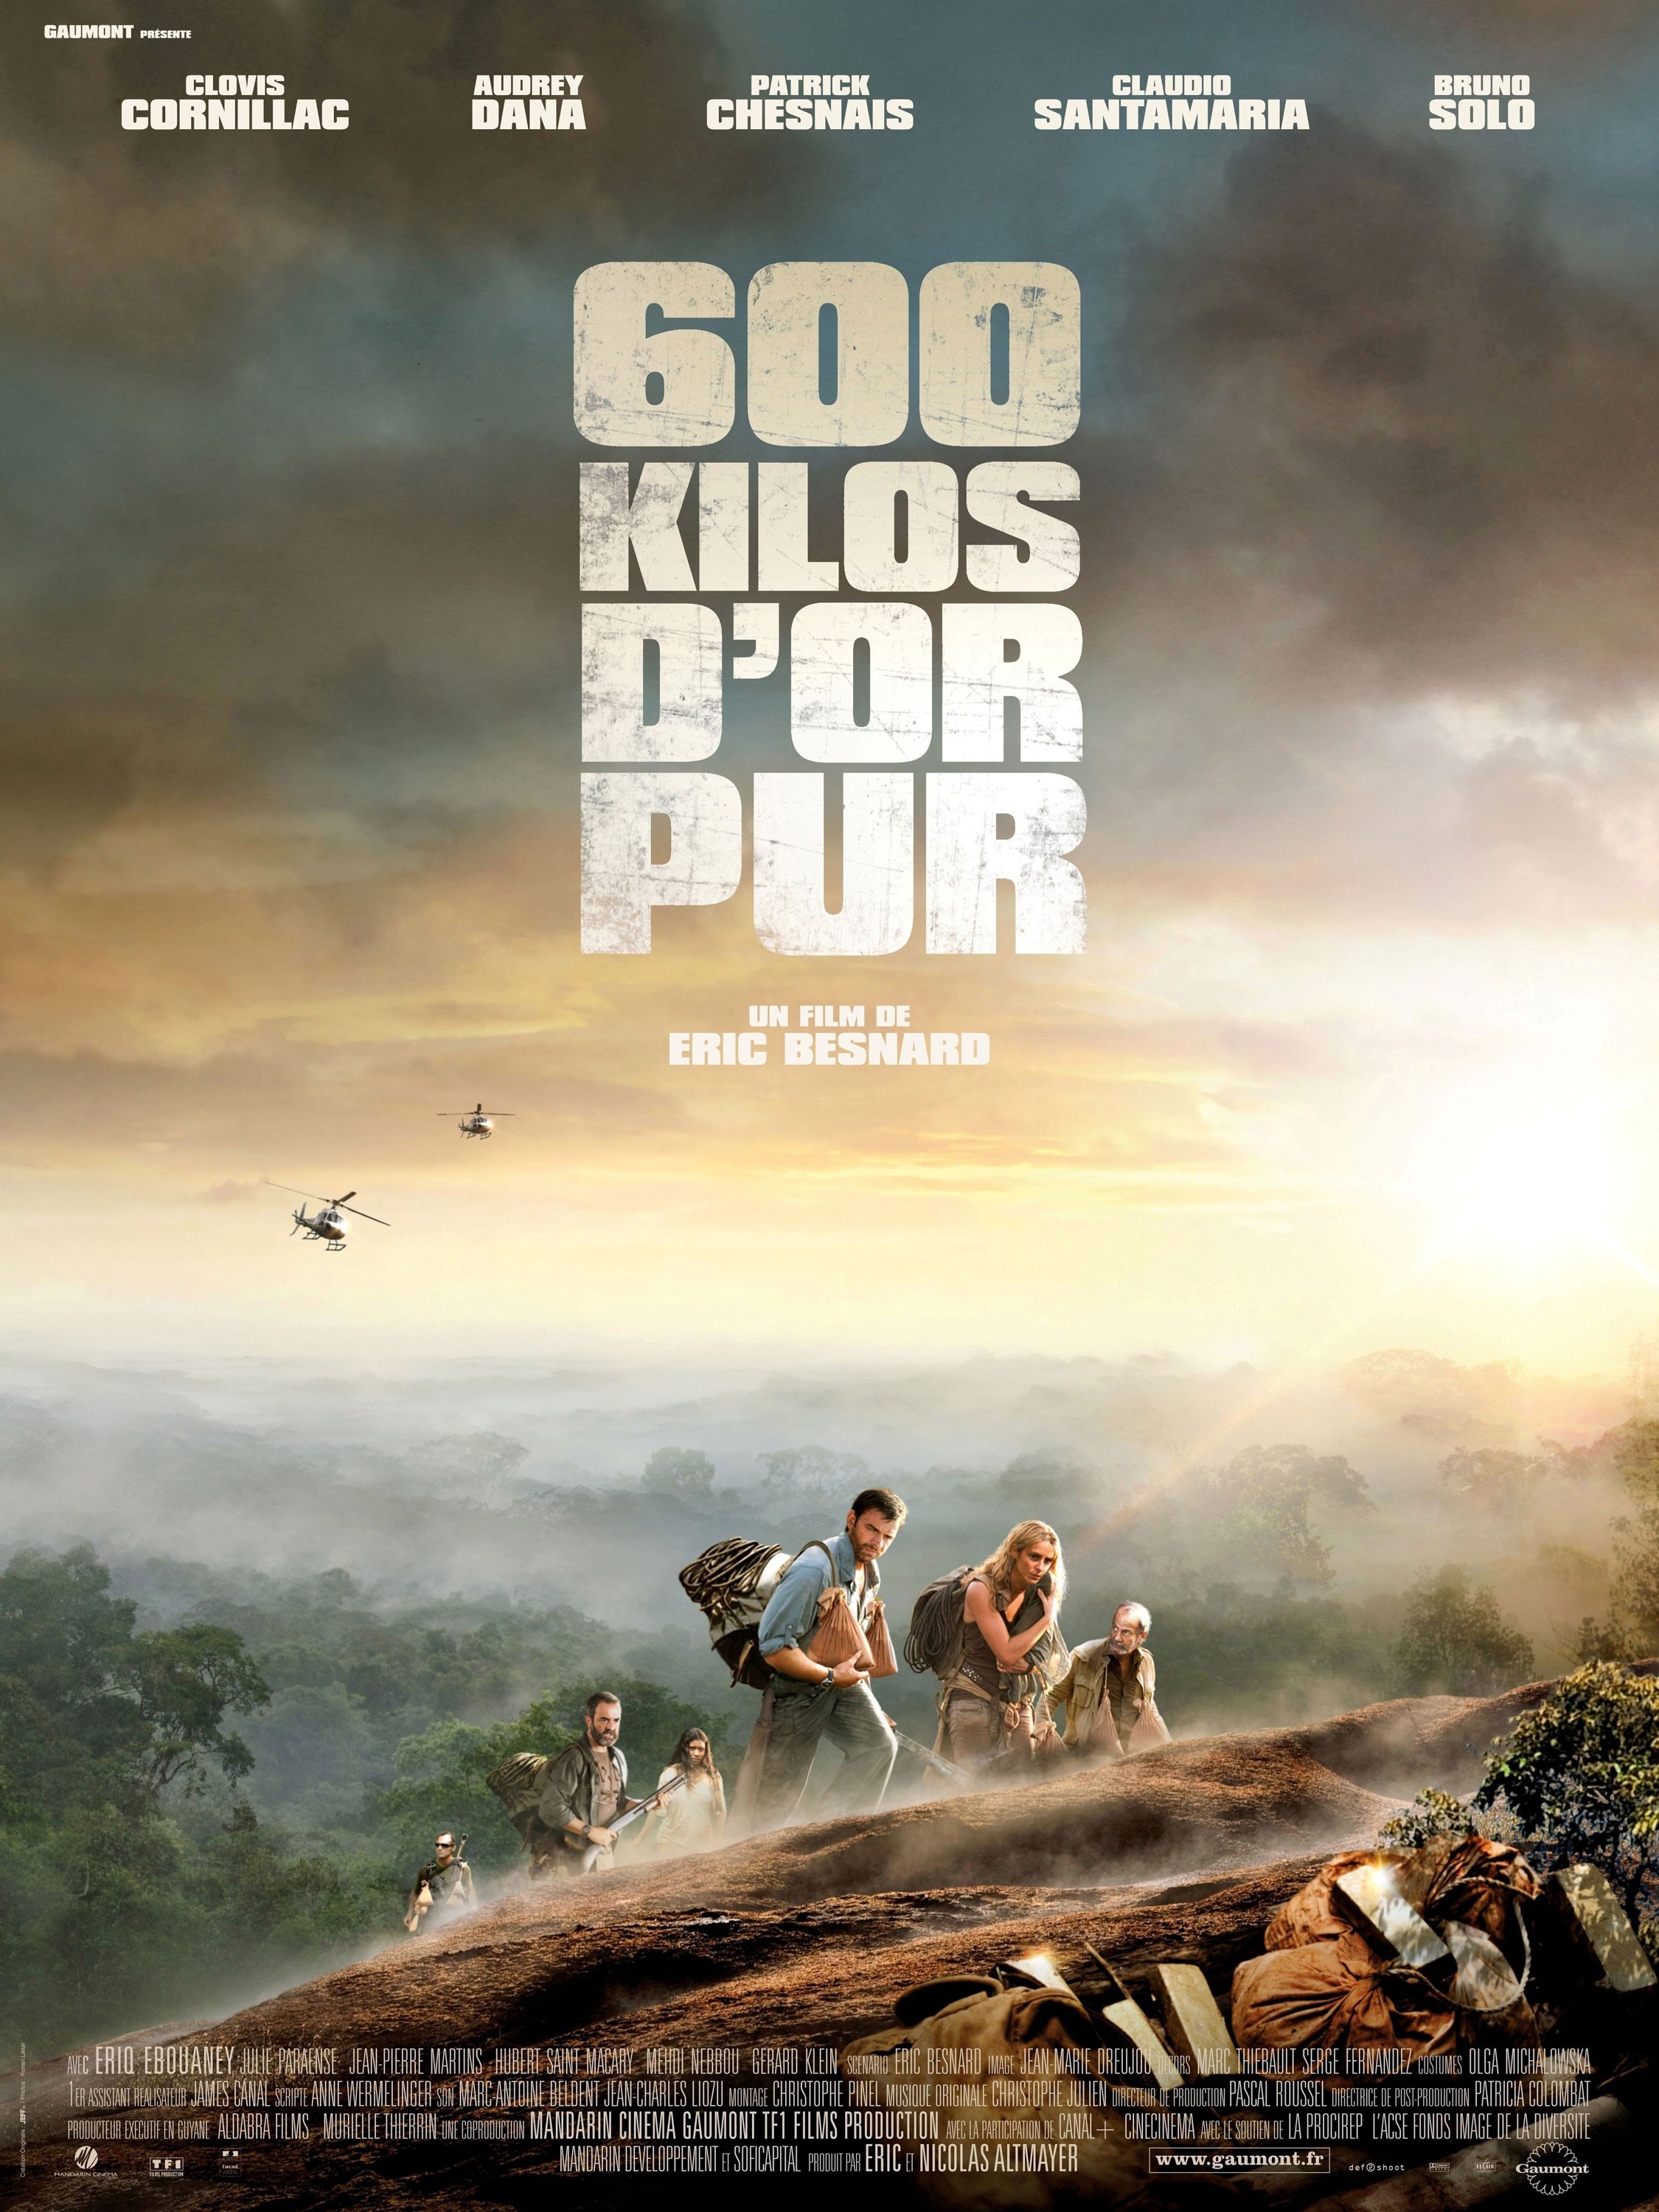 Mega Sized Movie Poster Image for 600 kilos d'or pur 